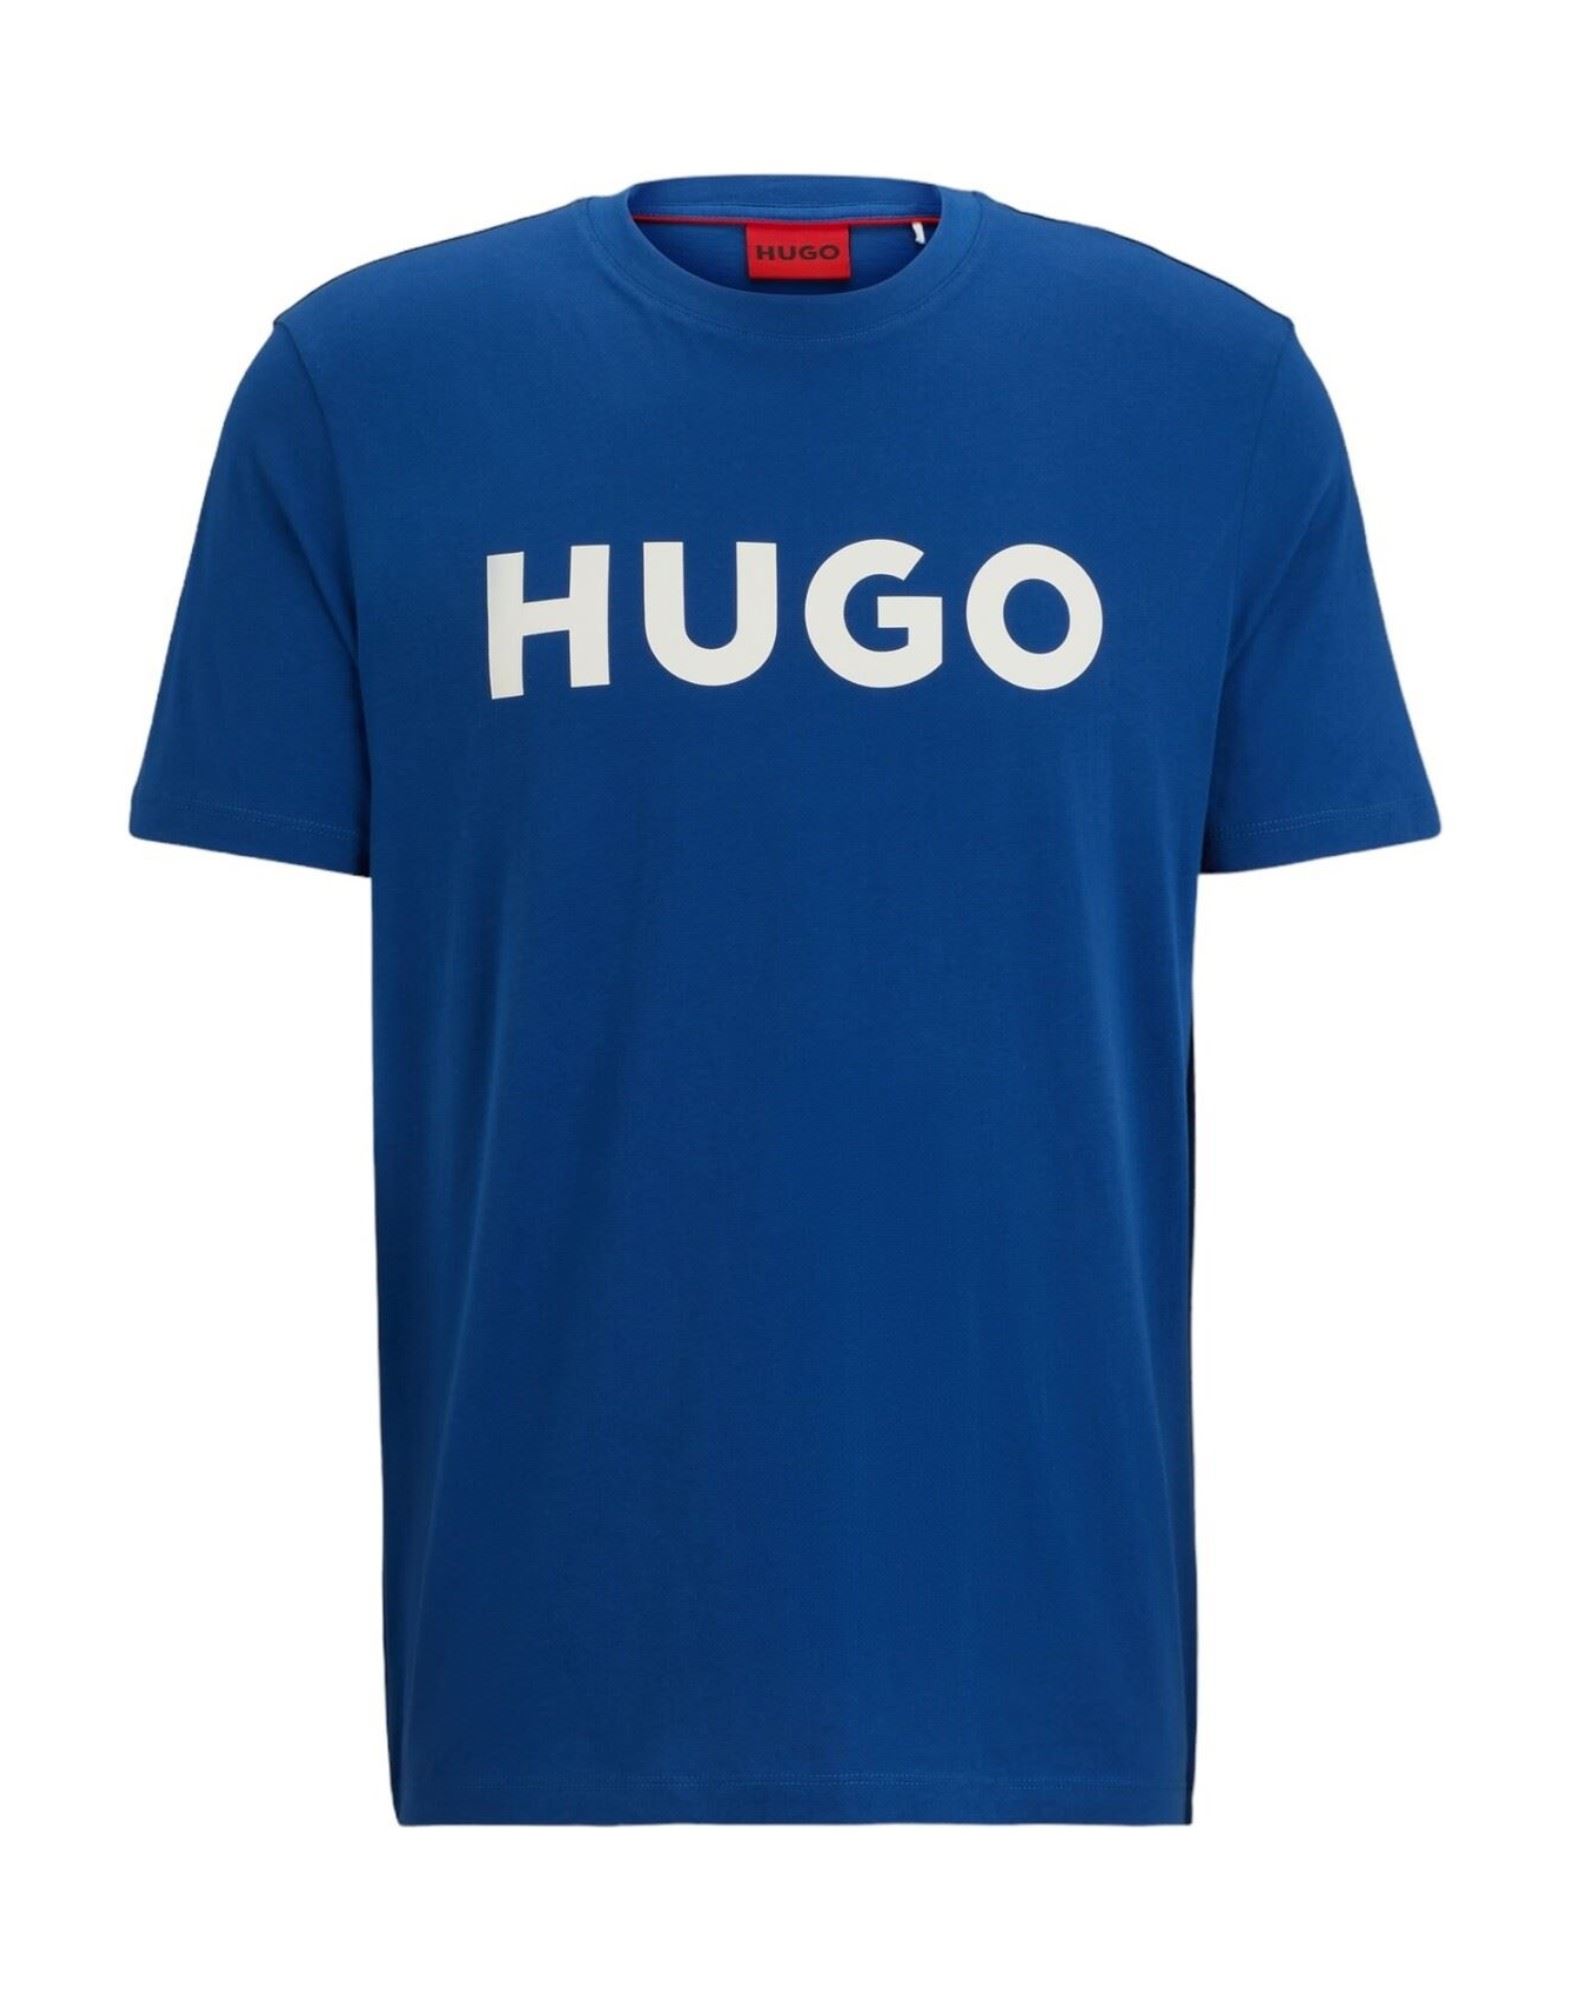 HUGO T-shirts Herren Blau von HUGO